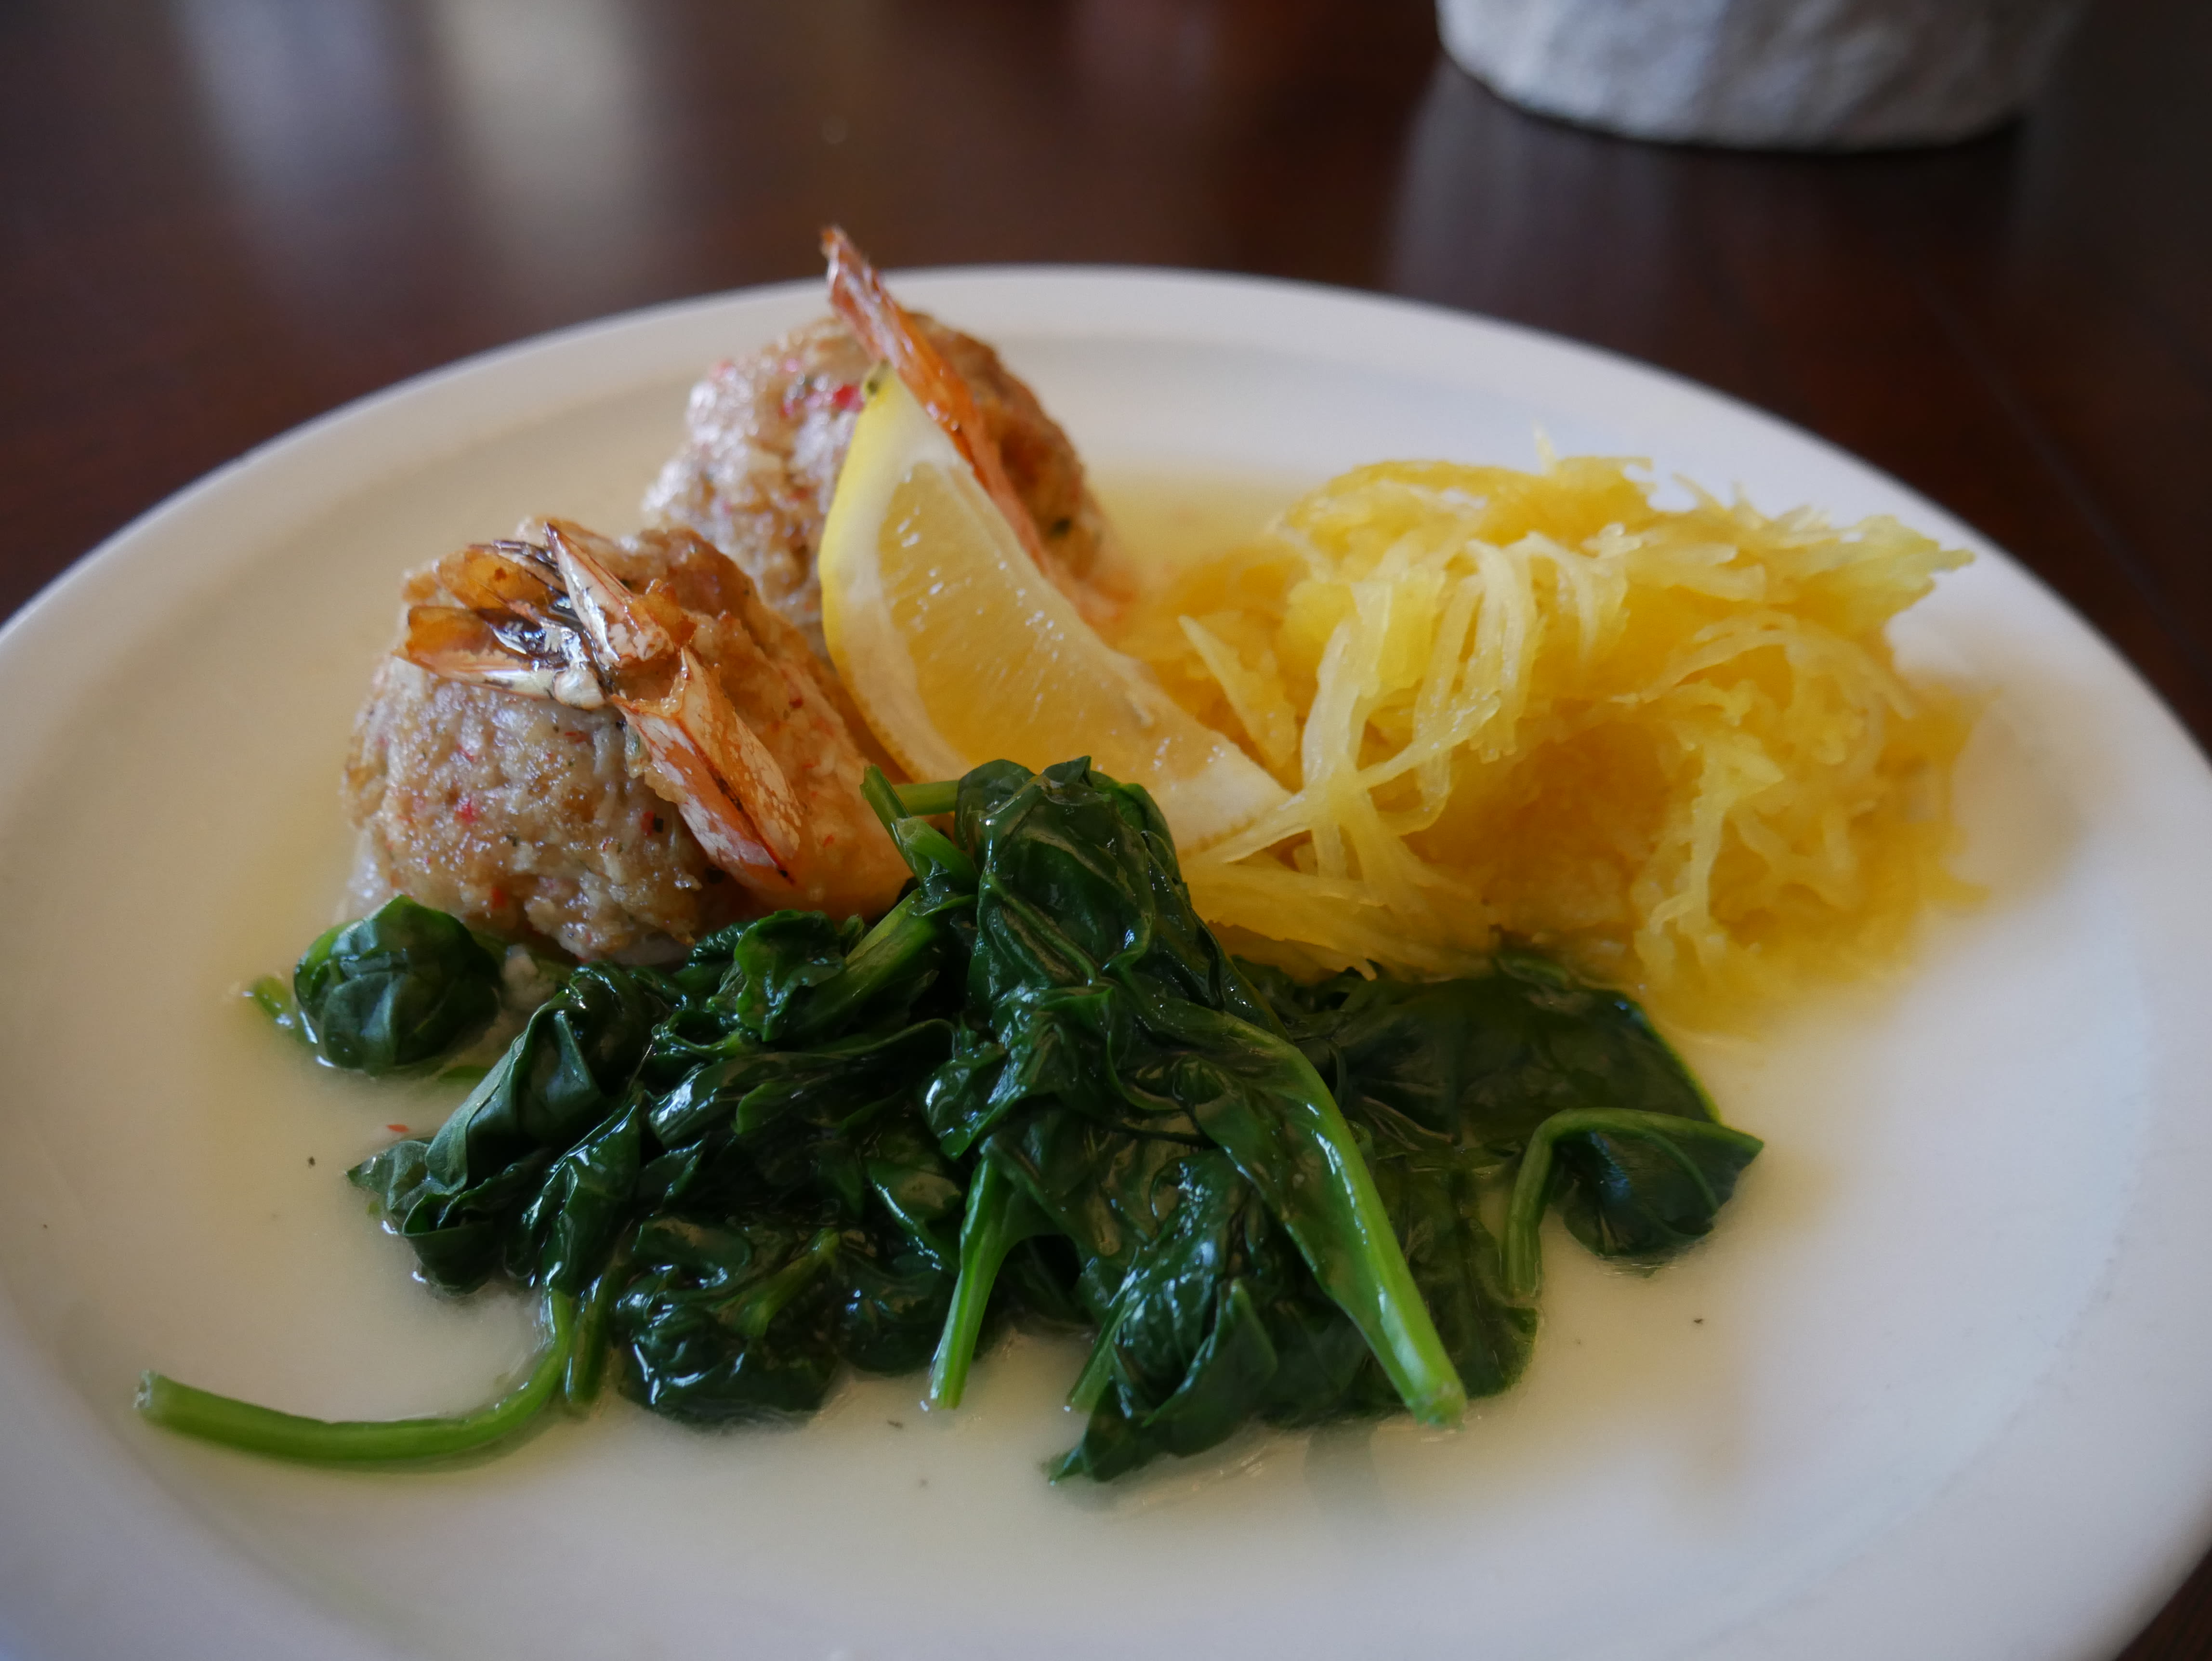 Stuffed shrimp with lemon-roasted spaghetti squash and spinach